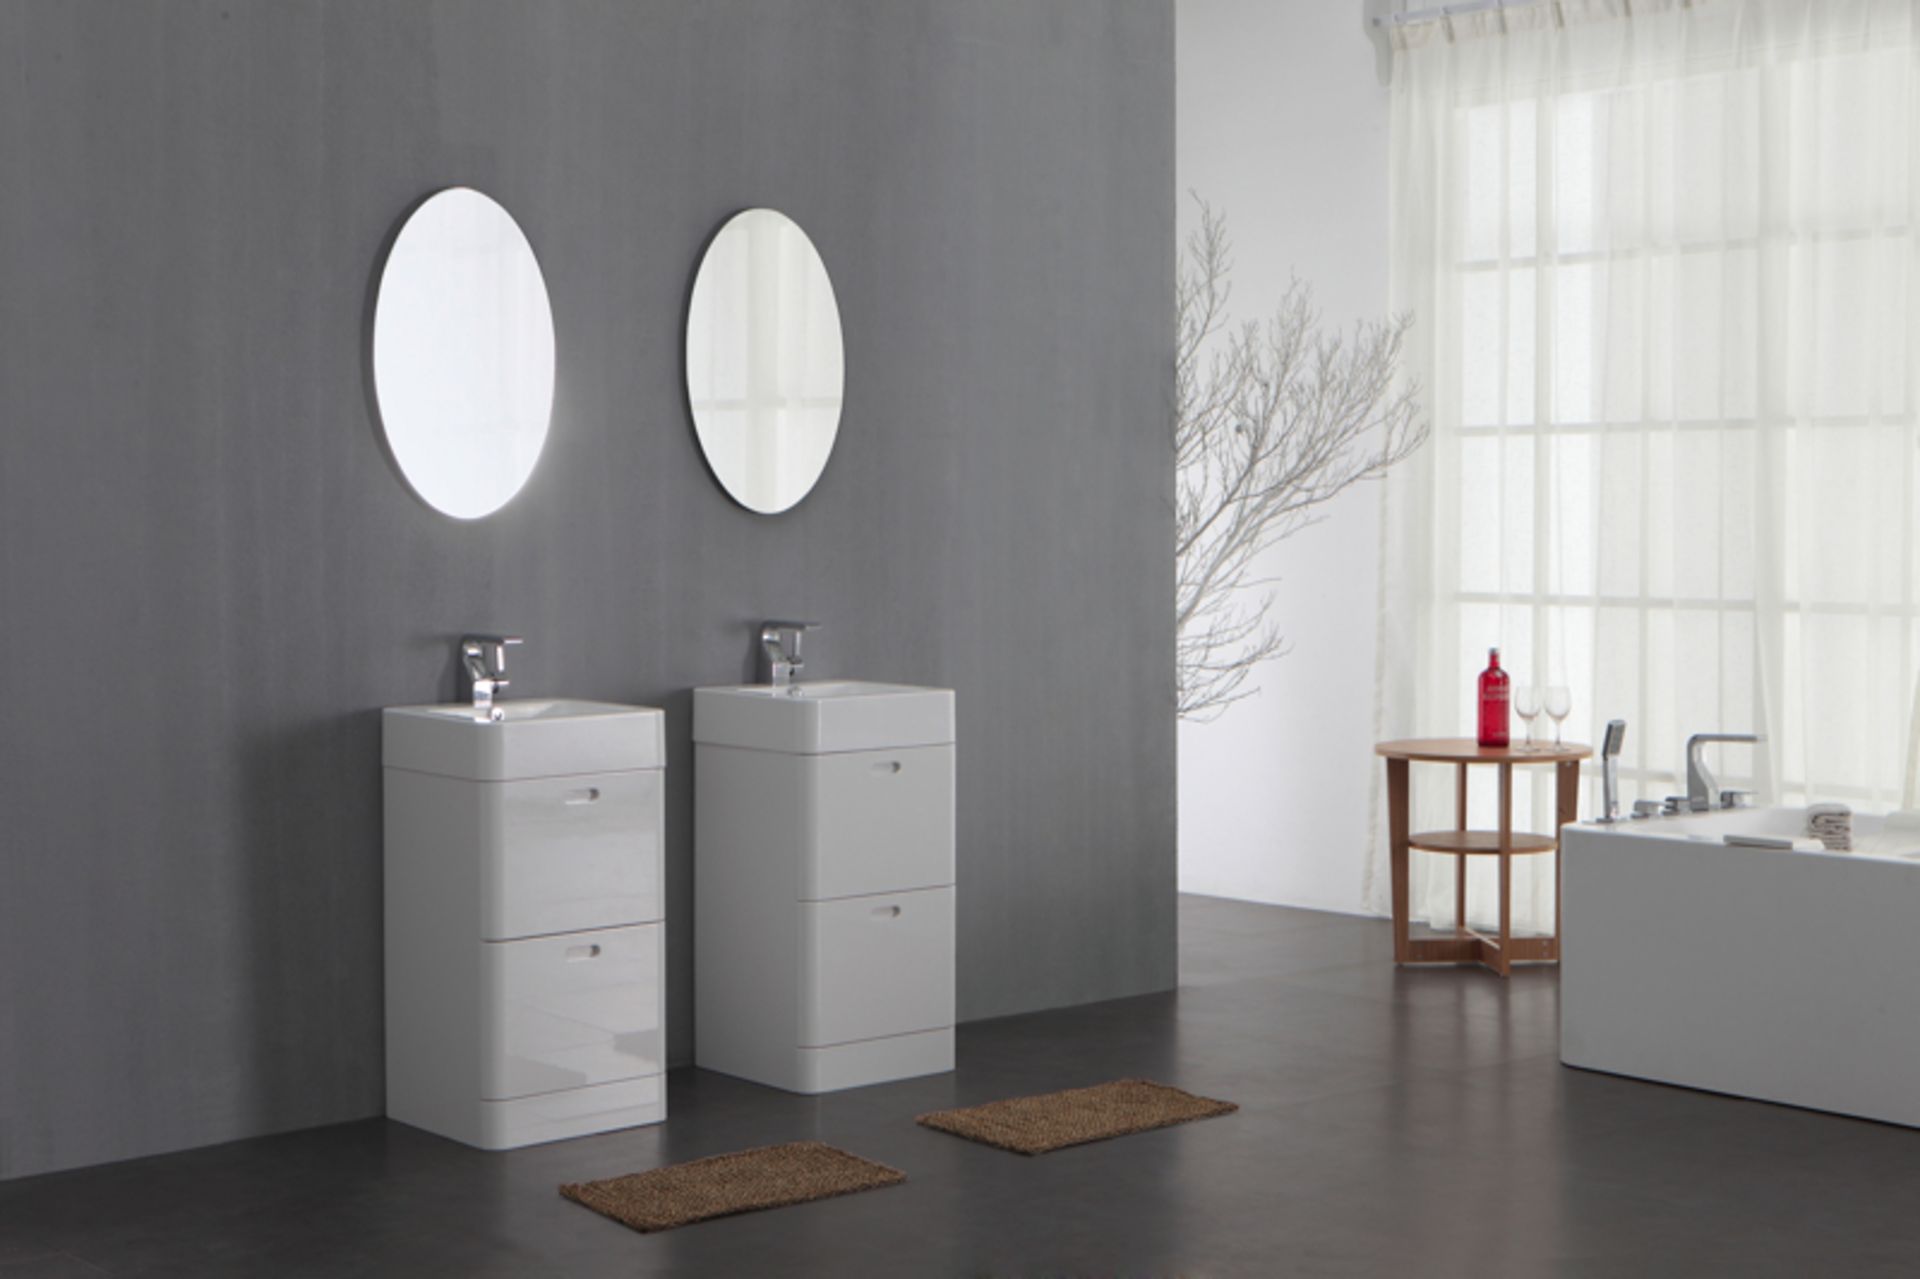 1 x Austin Bathrooms MINI STACKER Bathroom Vanity Unit With MarbleTECH Sink Basin - RRP £650 - - Image 4 of 5